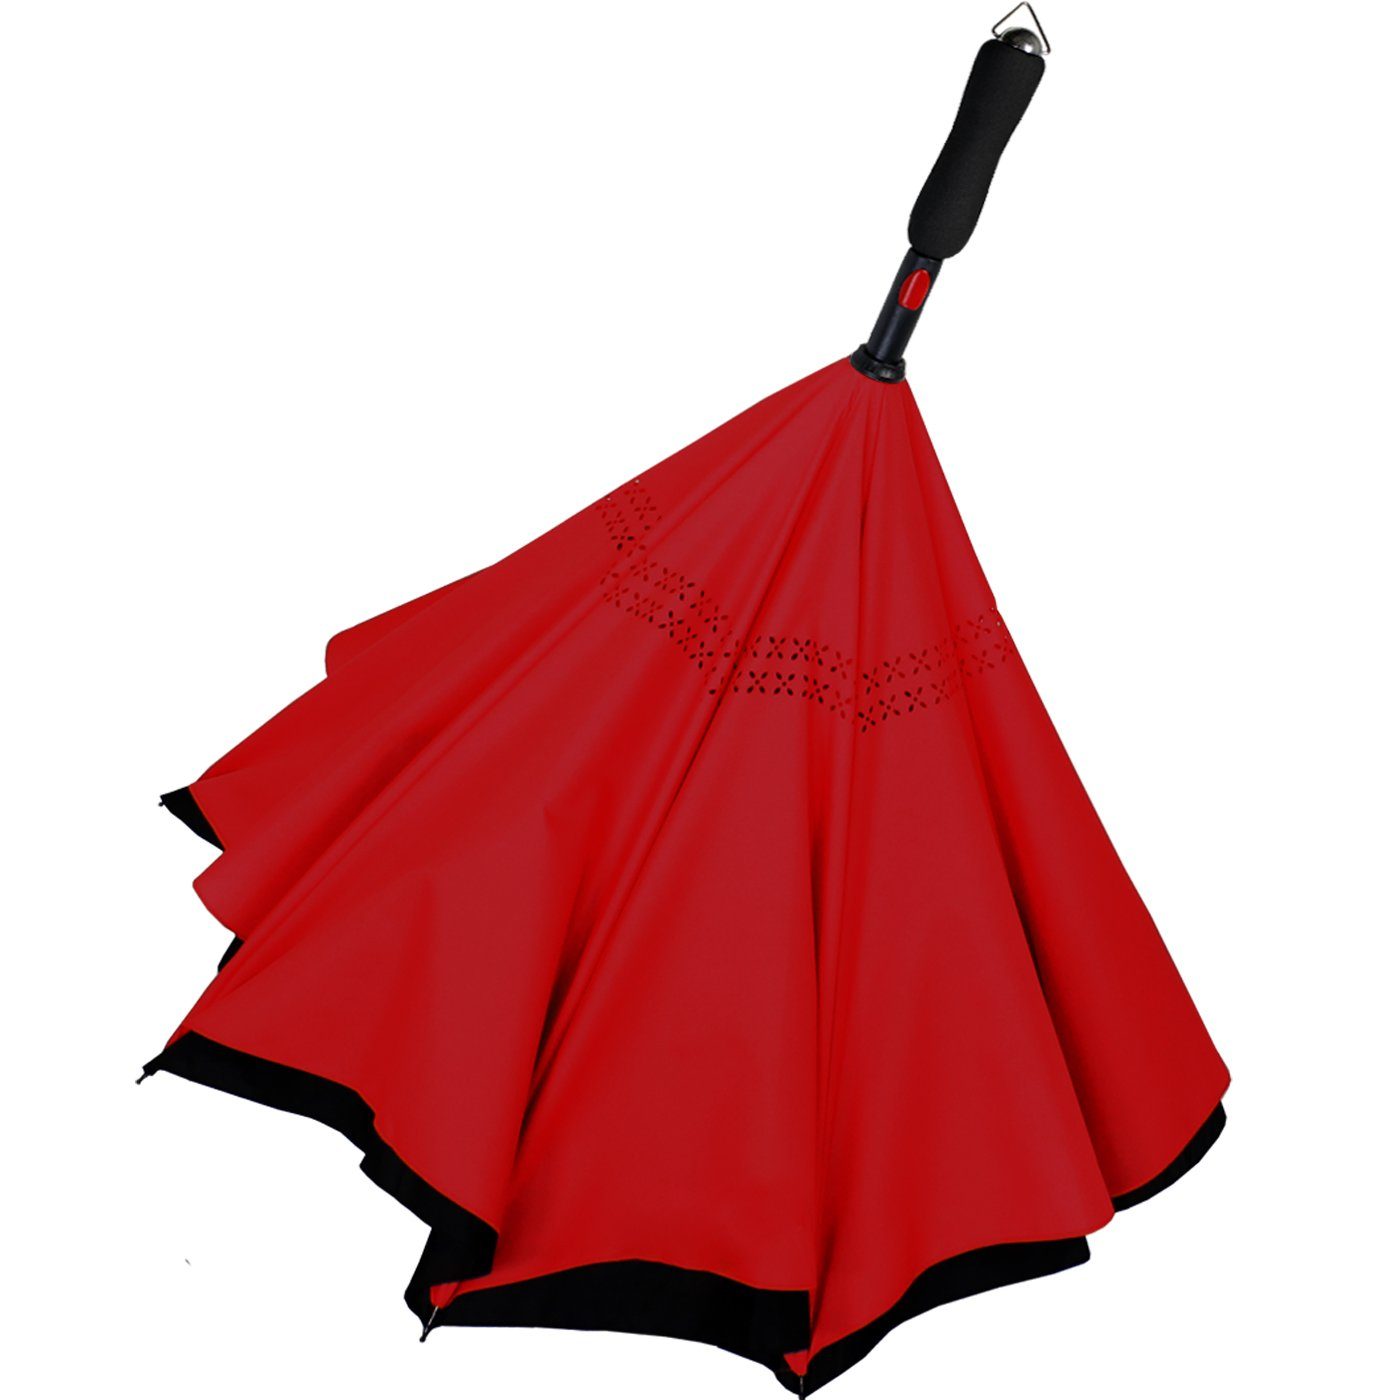 Automatik, - umgedreht mit zu öffnen iX-brella umgedreht Langregenschirm schwarz-dunkelrot Reverse-Schirm